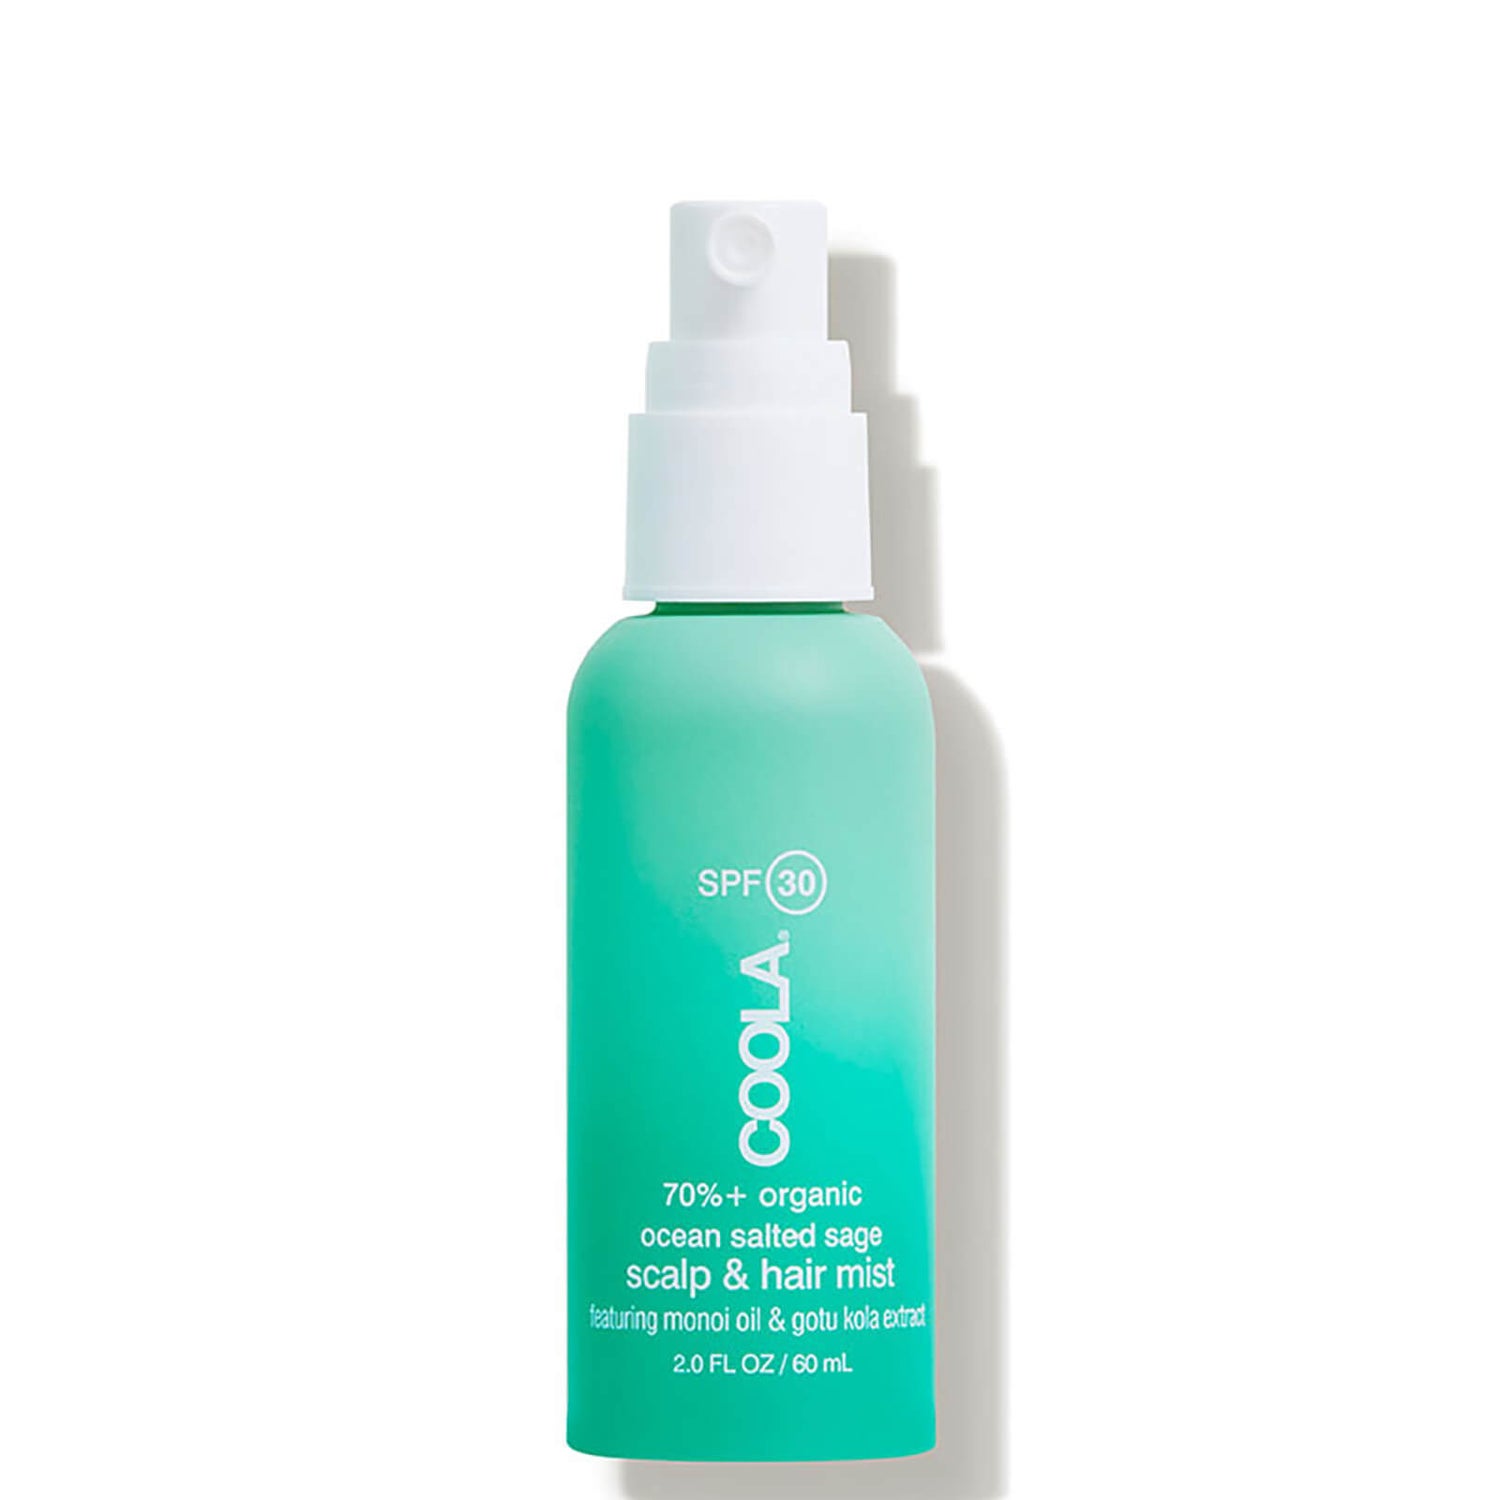 COOLA Scalp and Hair Mist Organic Sunscreen SPF 30 2 fl. oz